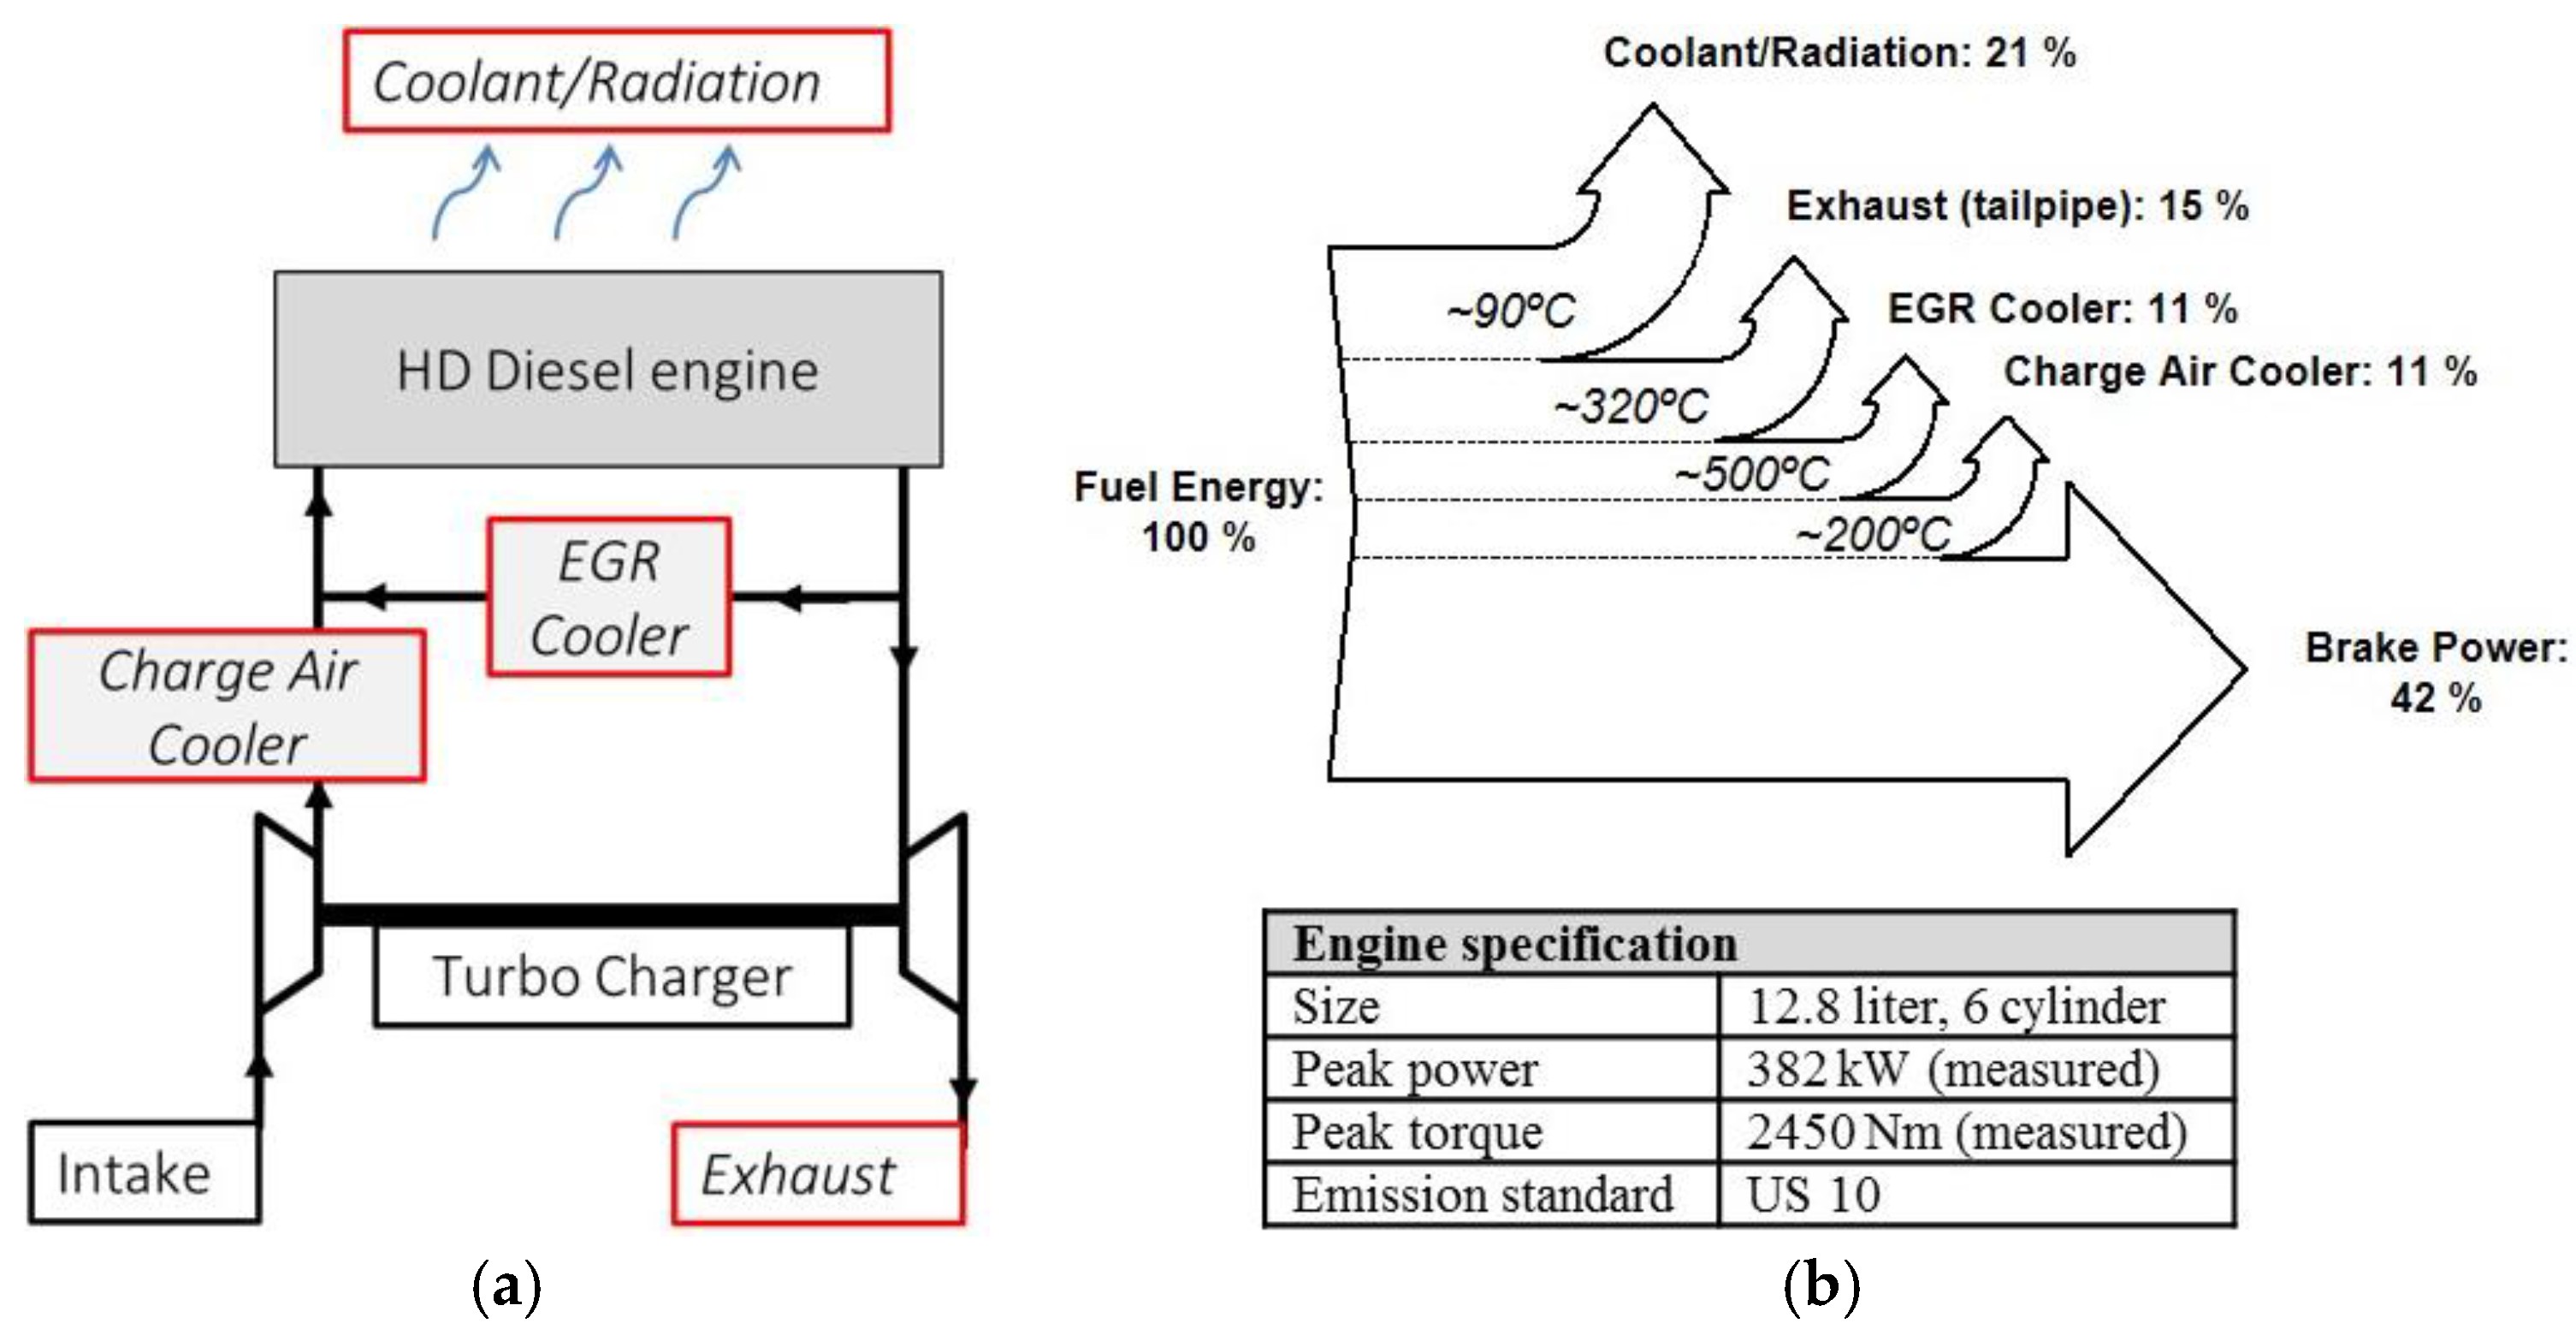 4 Cylinder Engine Diagram Energies Free Full Text Of 4 Cylinder Engine Diagram